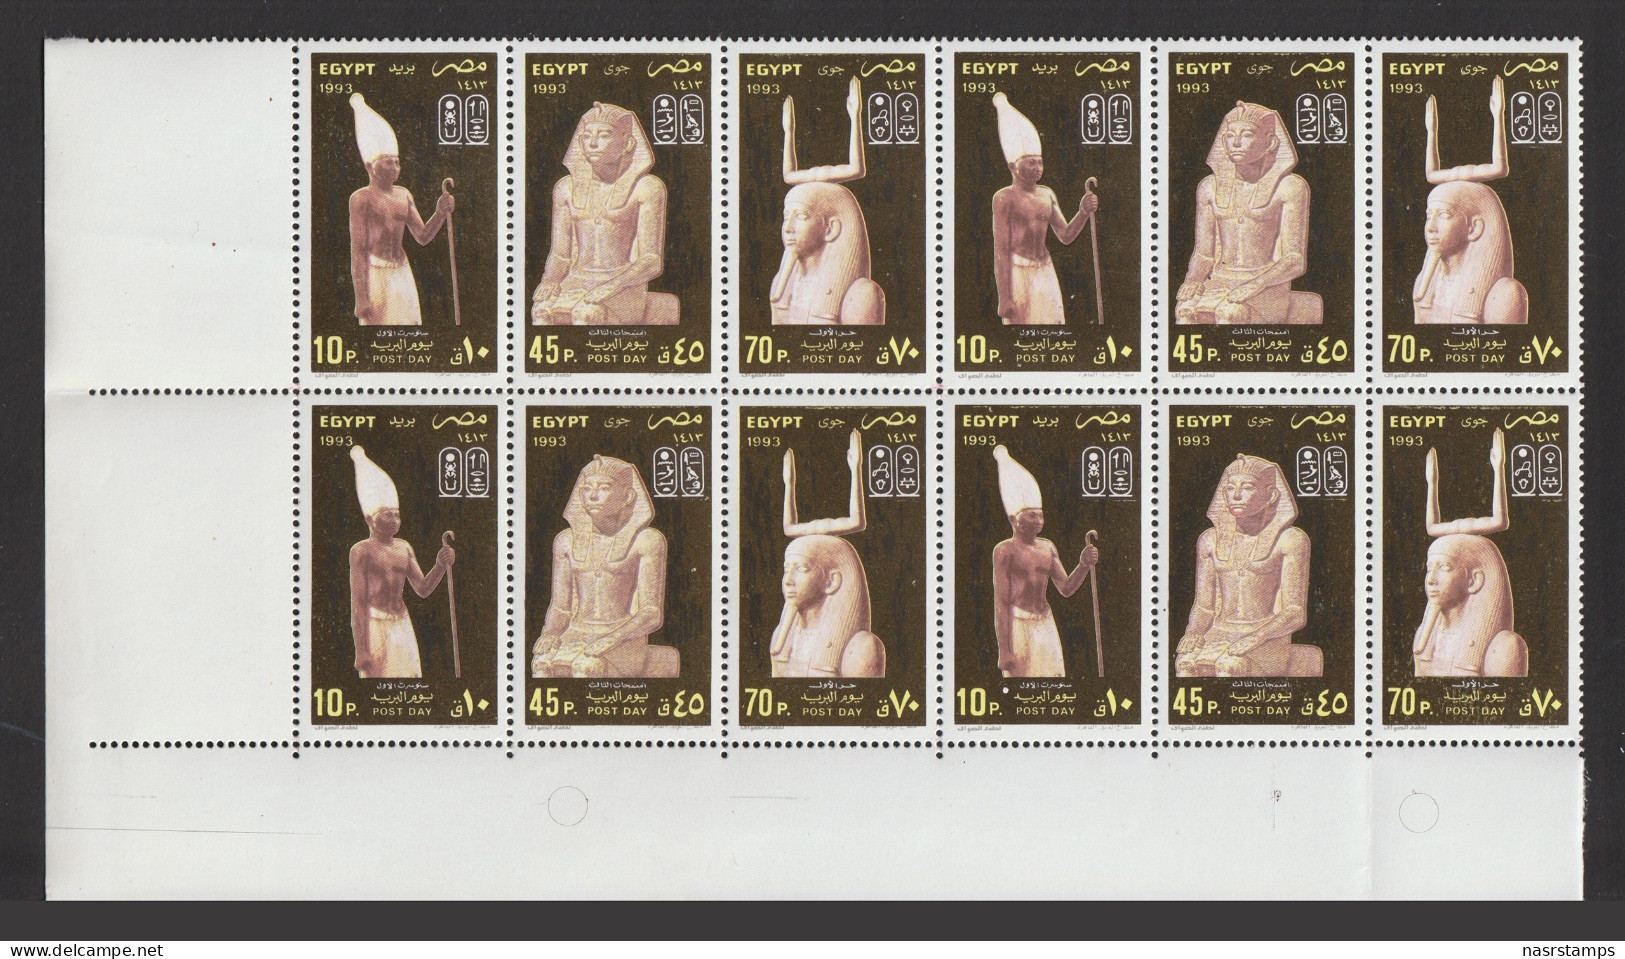 Egypt - 1993 - Block Of 4 Set - ( Post Day - Sesostris, Amenemhet III & Hur I ) - MNH (**) - Unused Stamps